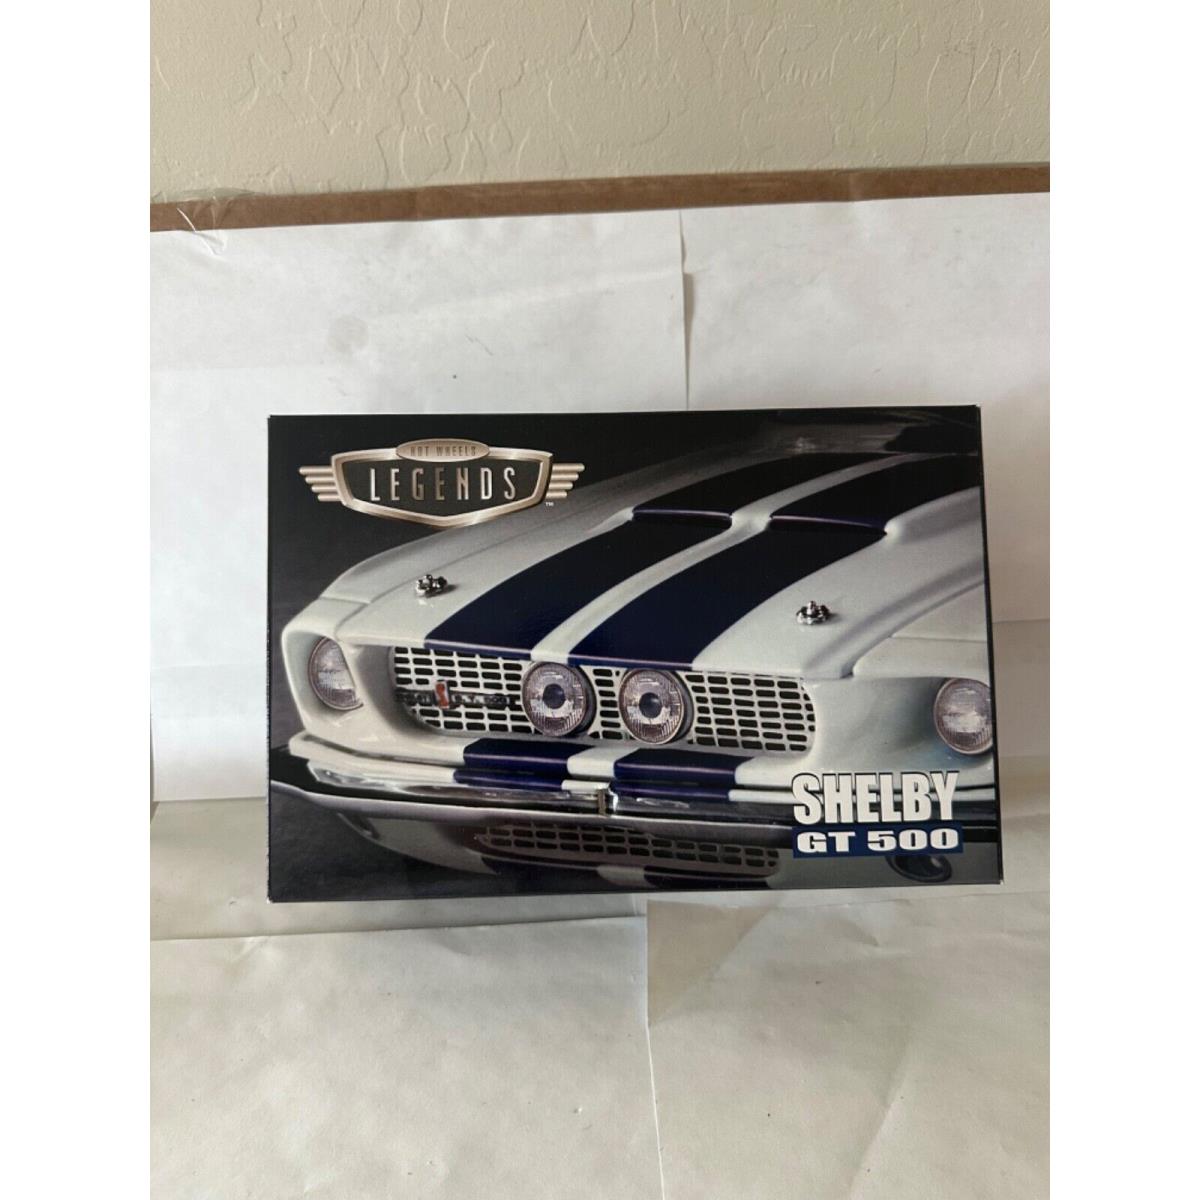 1999 Hot Wheels Legends Shelby GT 500 Diecast Model Car 1:24 1:64 Scale P83